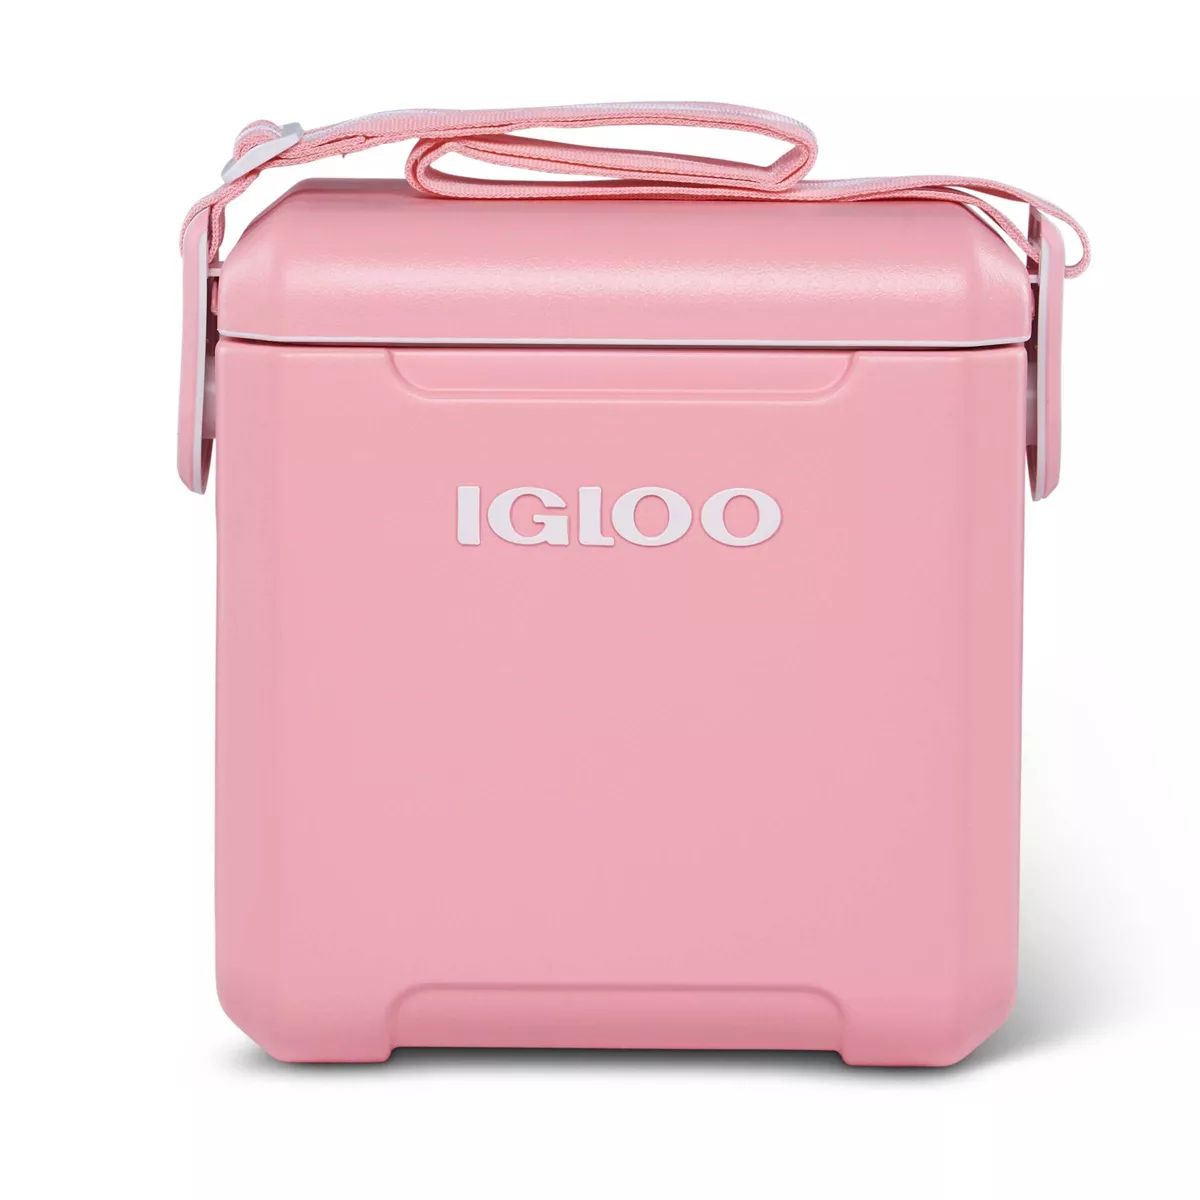 Igloo Tag Along Too 11 Quart Hard Sided Cooler - Blush | Target